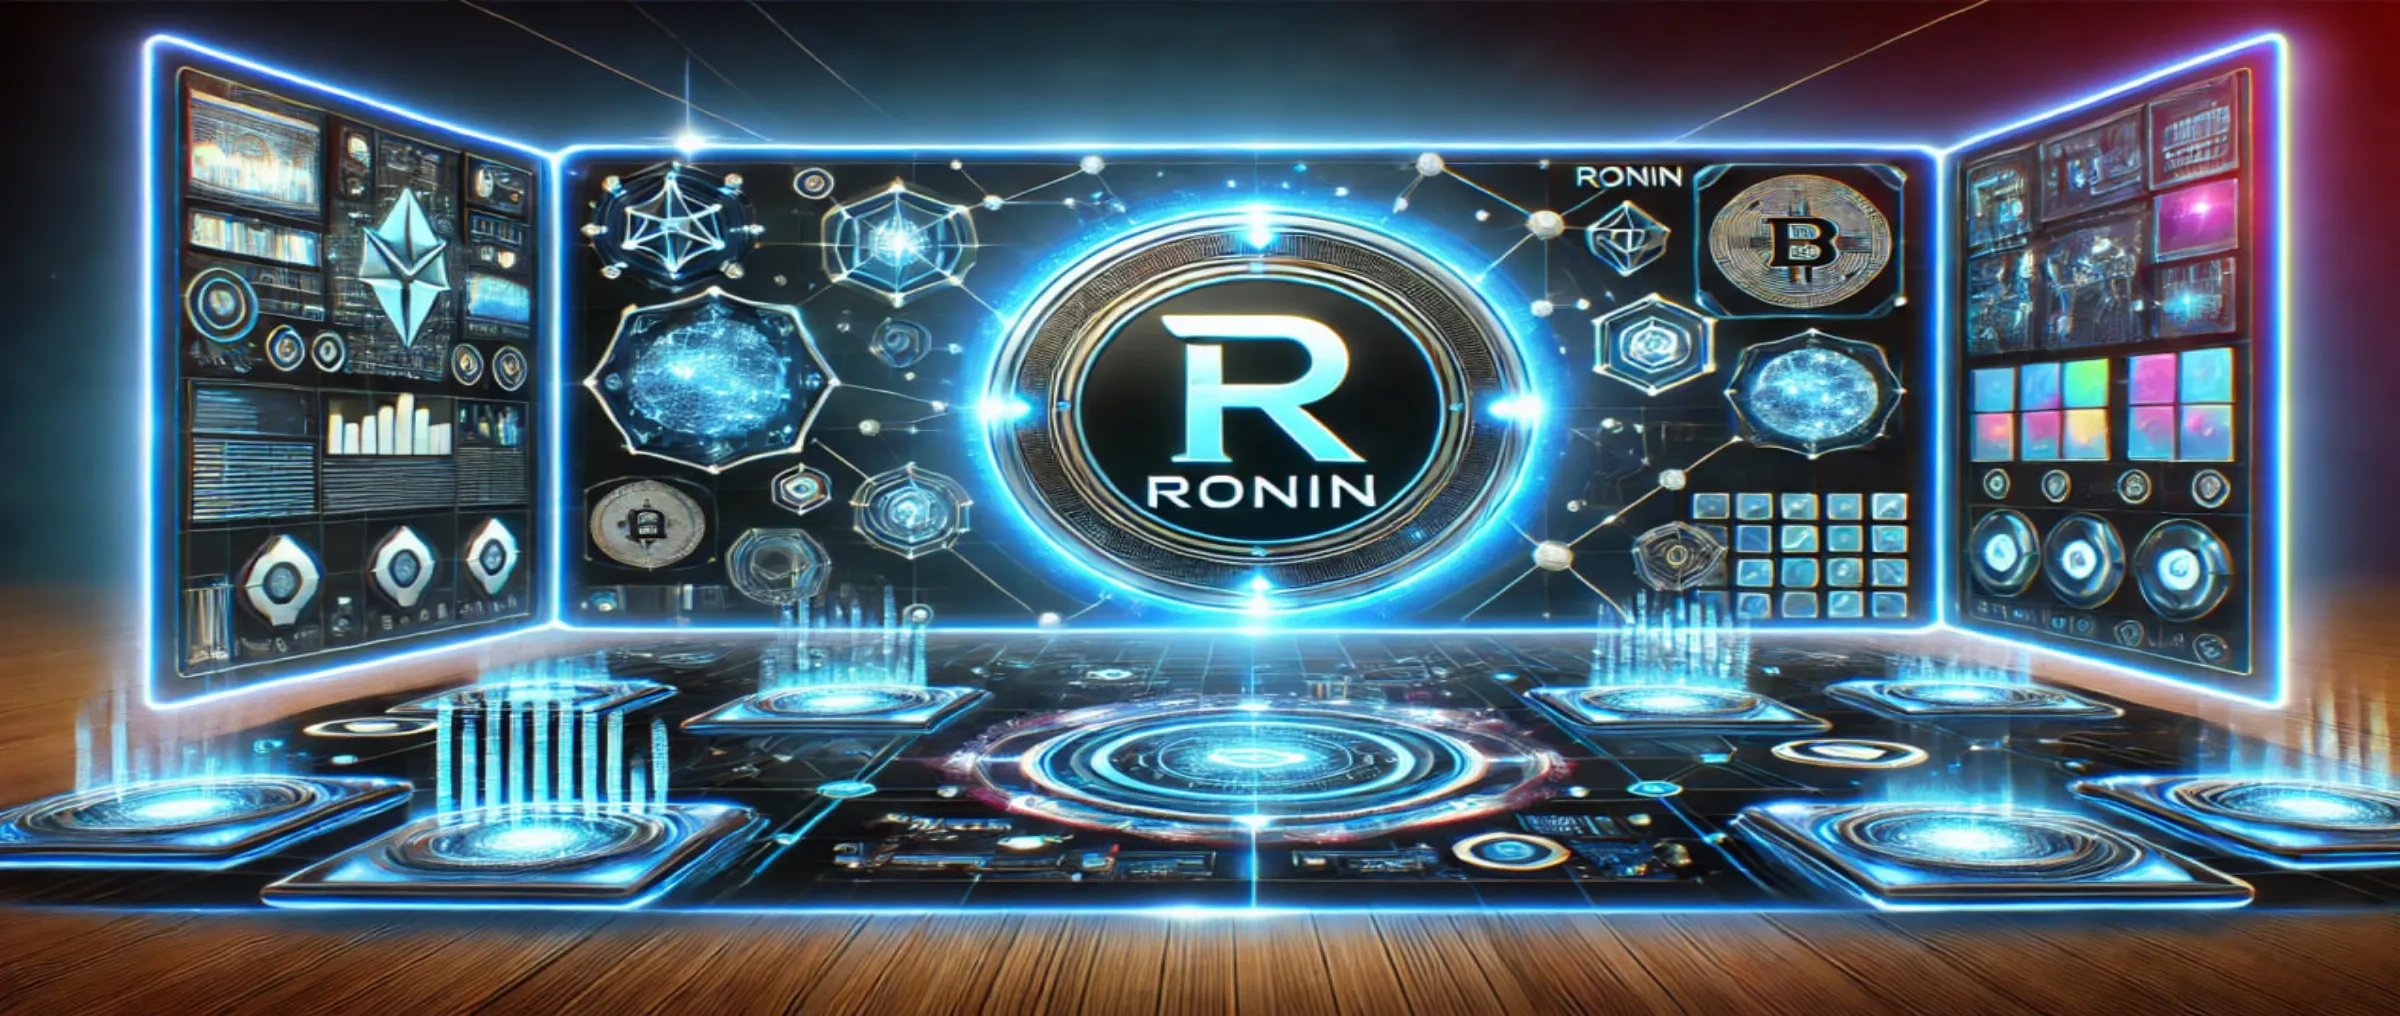 Ronin will launch zkEVM on its gaming blockchain platform